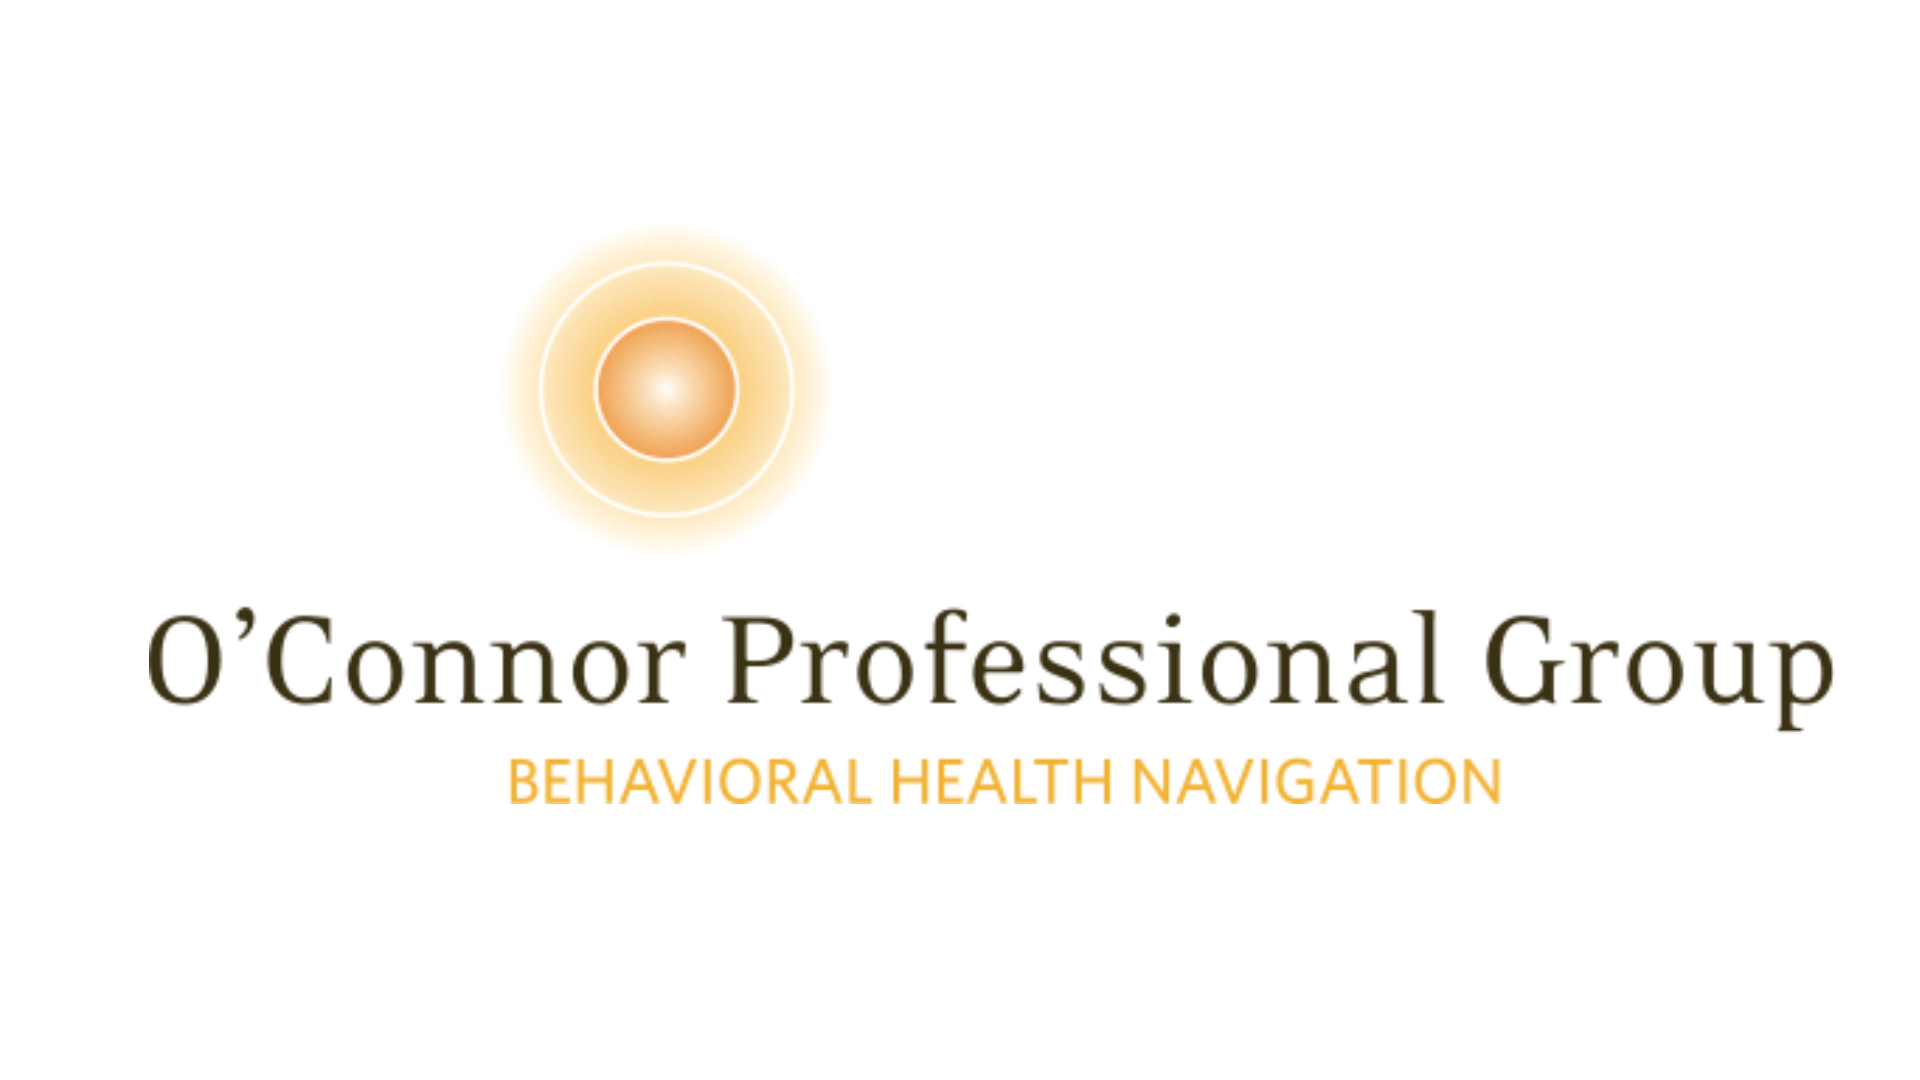 O'Connor Professional group logo